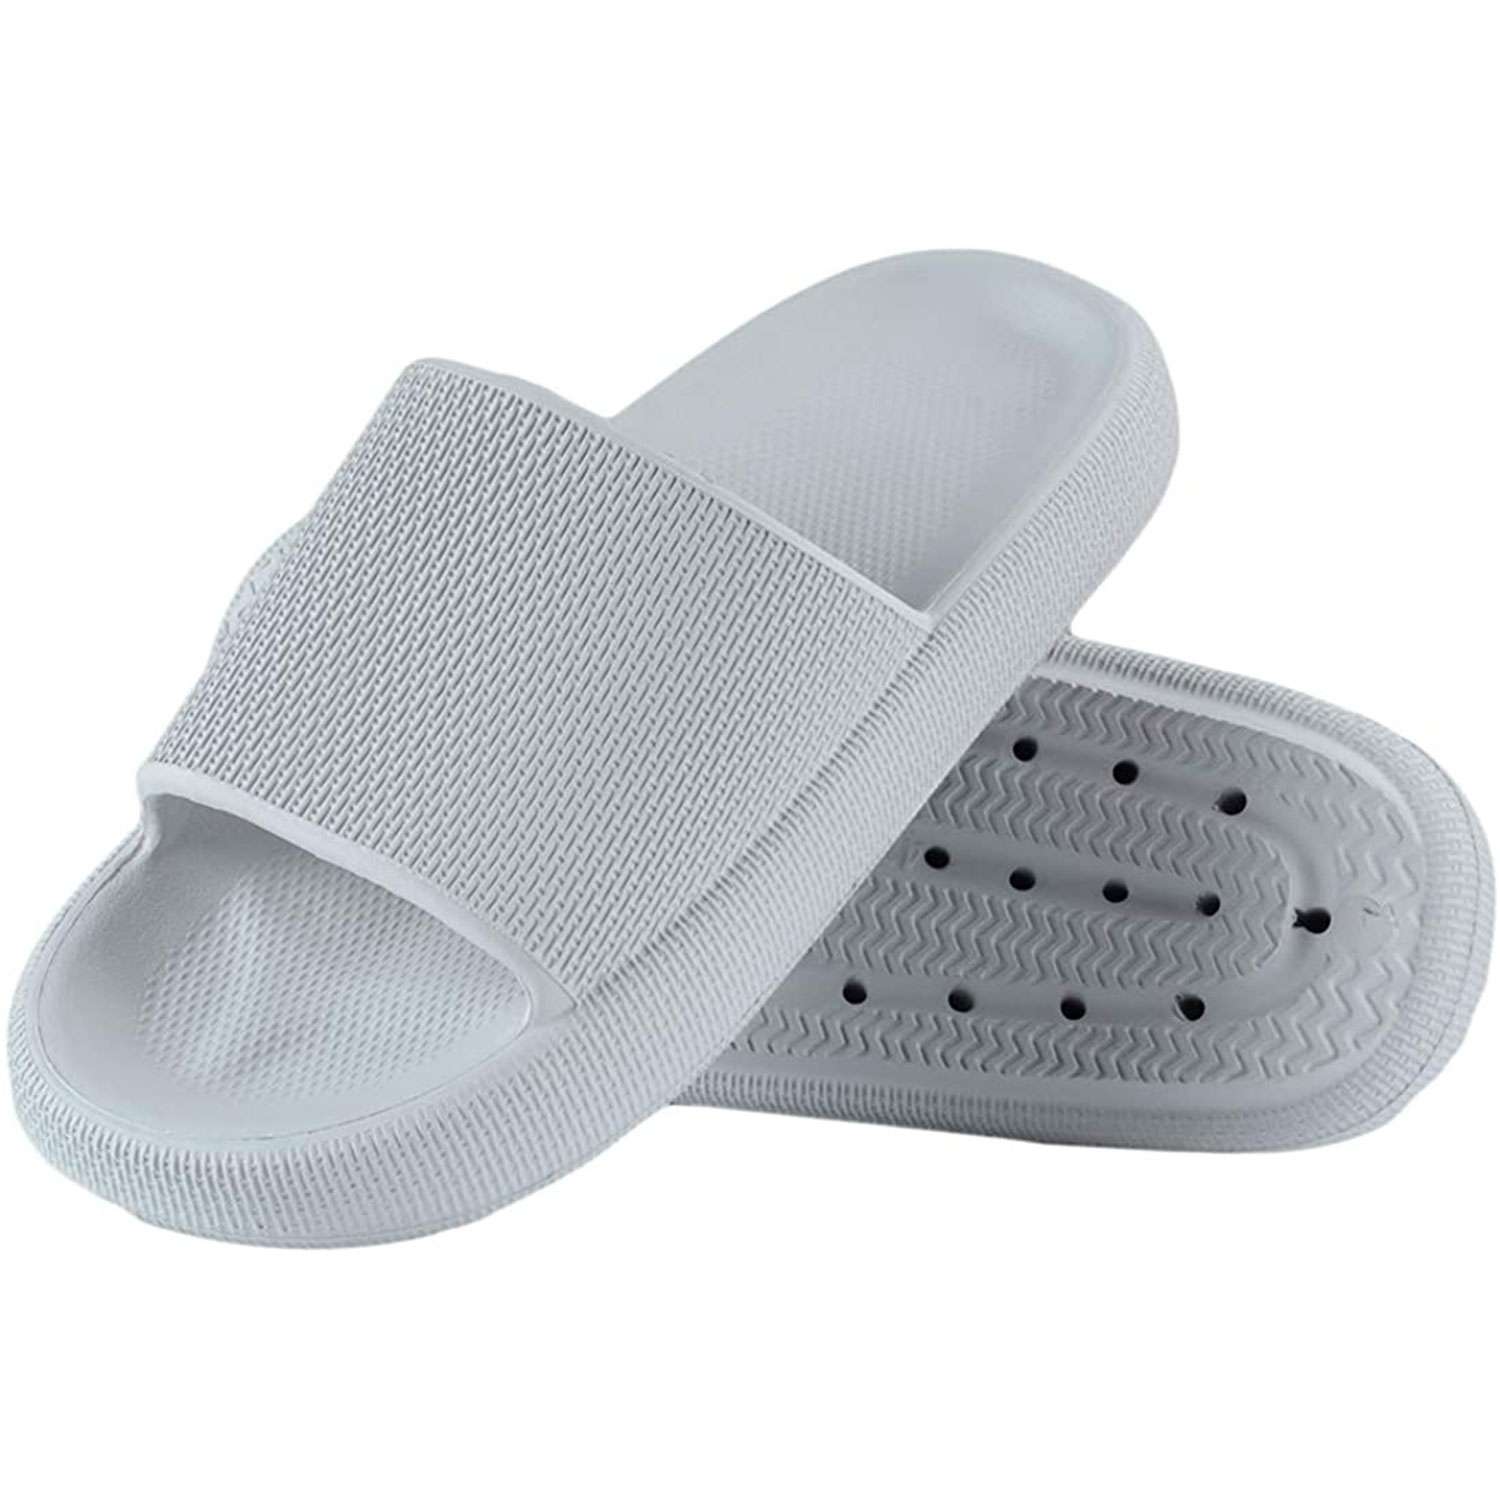 Amaeen Pillow Slippers Thick Sole Non-Slip Home Slipper Unisex Quick Dry Slipper